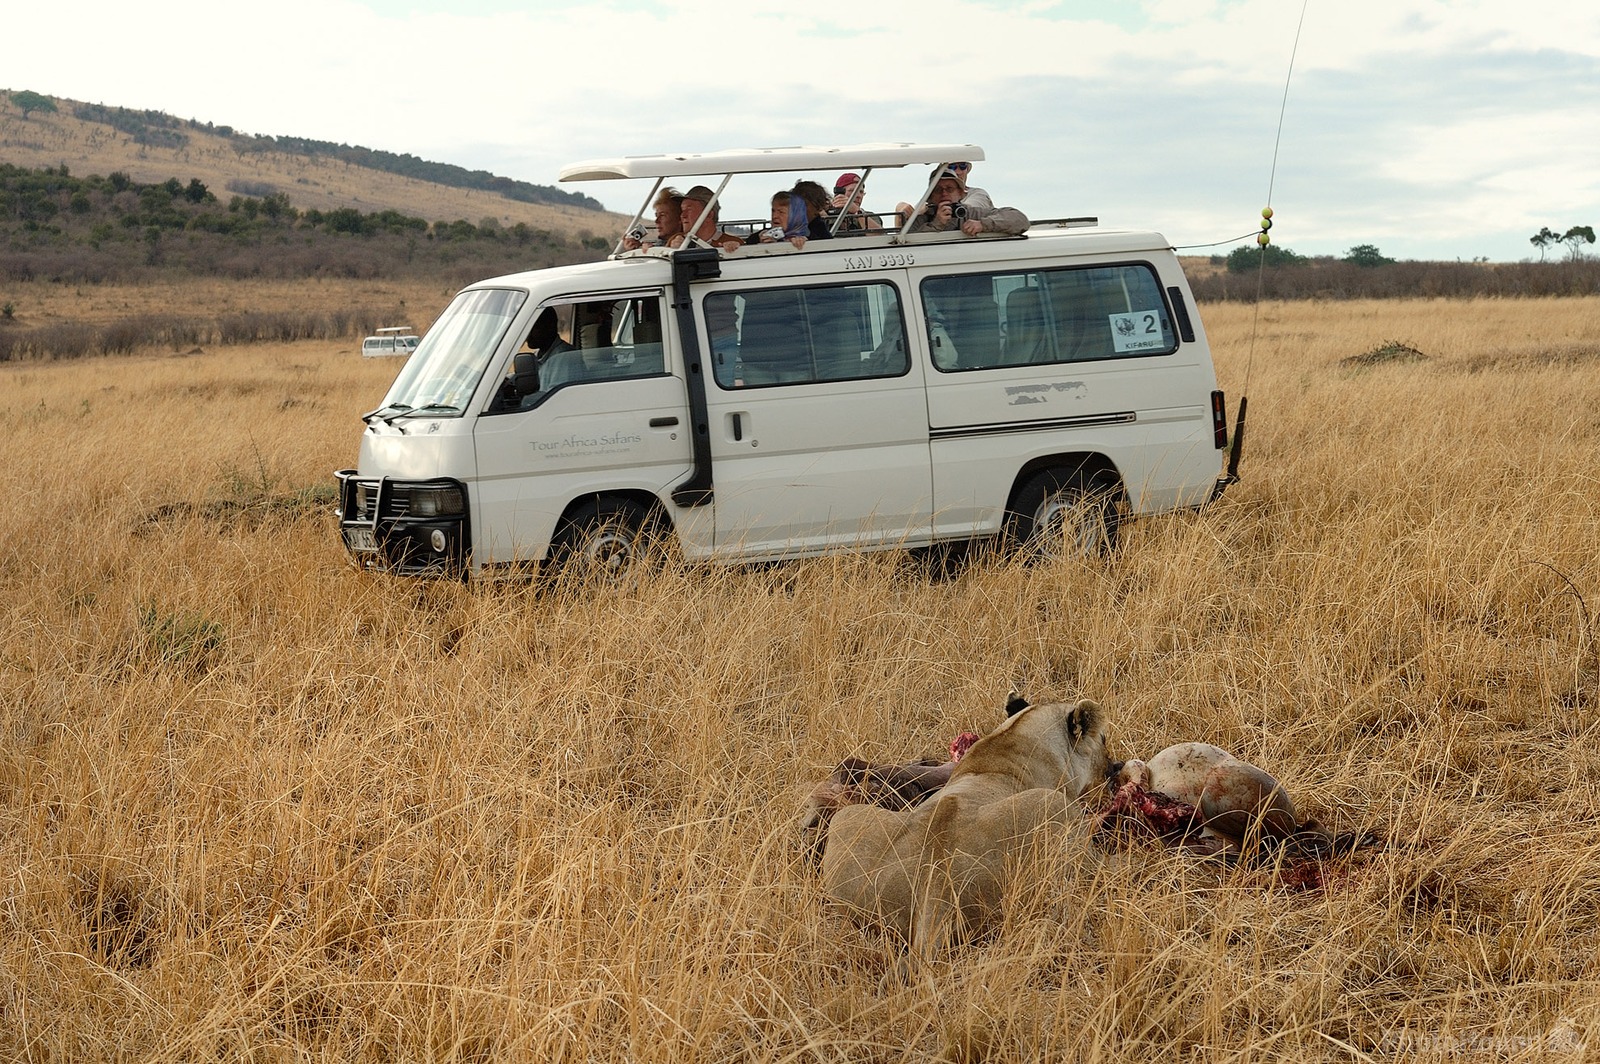 Image of Maasai Mara Game Reserve by Luka Esenko